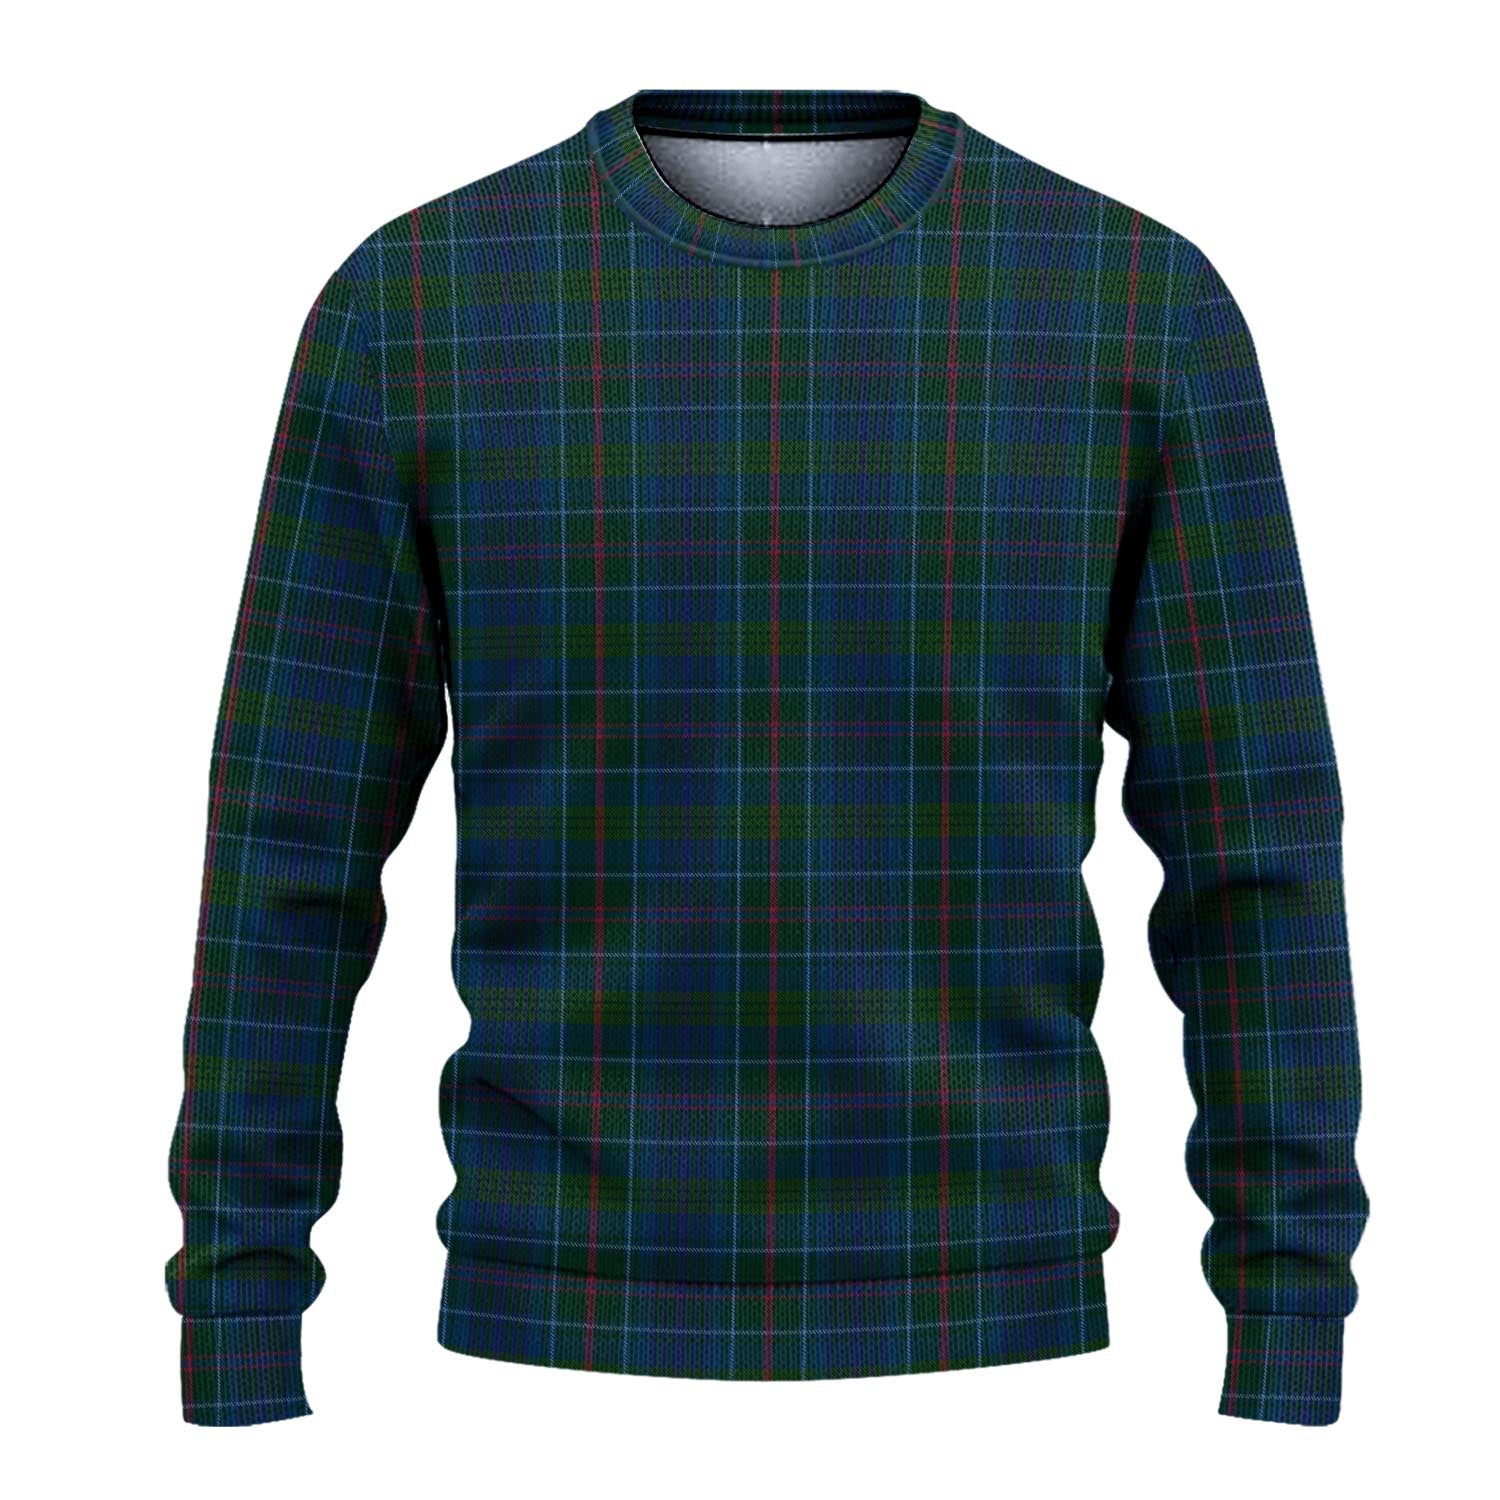 Richard of Wales Tartan Knitted Sweater - Tartanvibesclothing